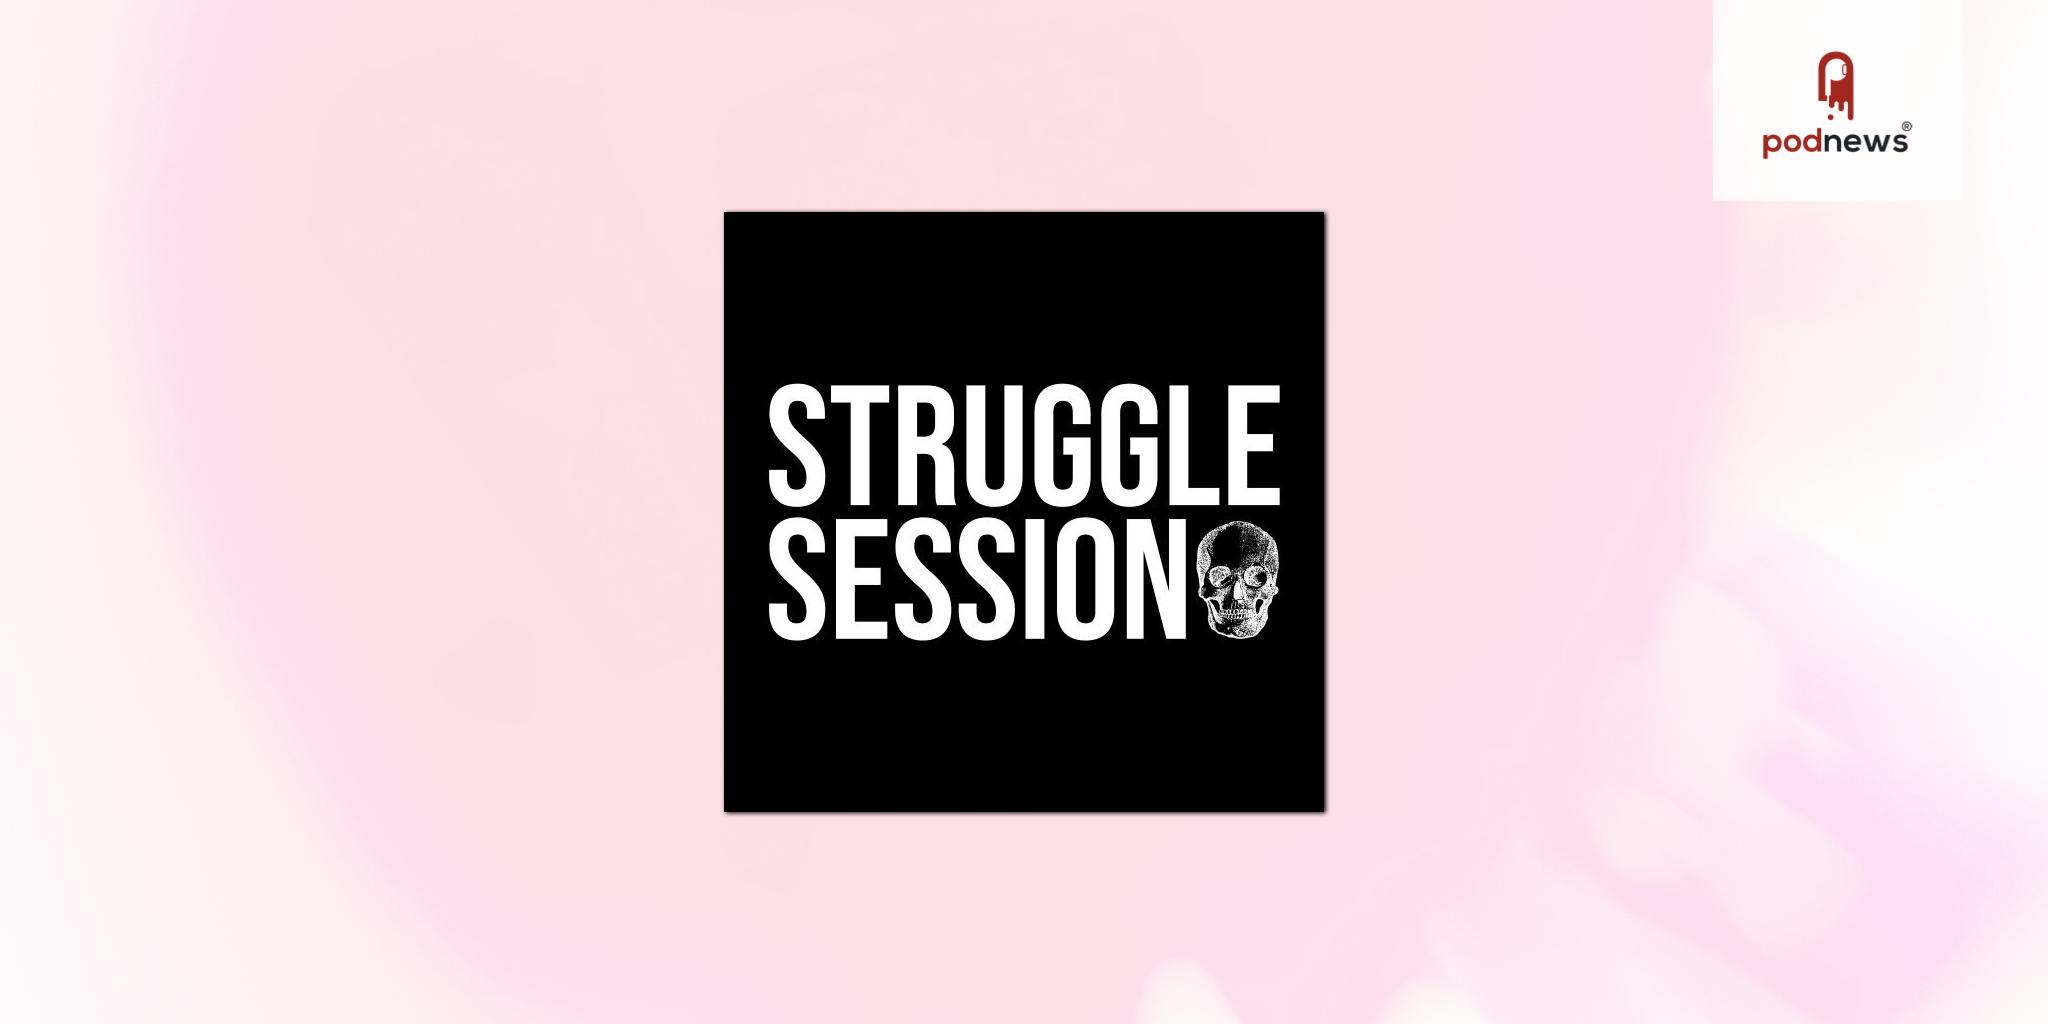 podcast struggle session infinity wars